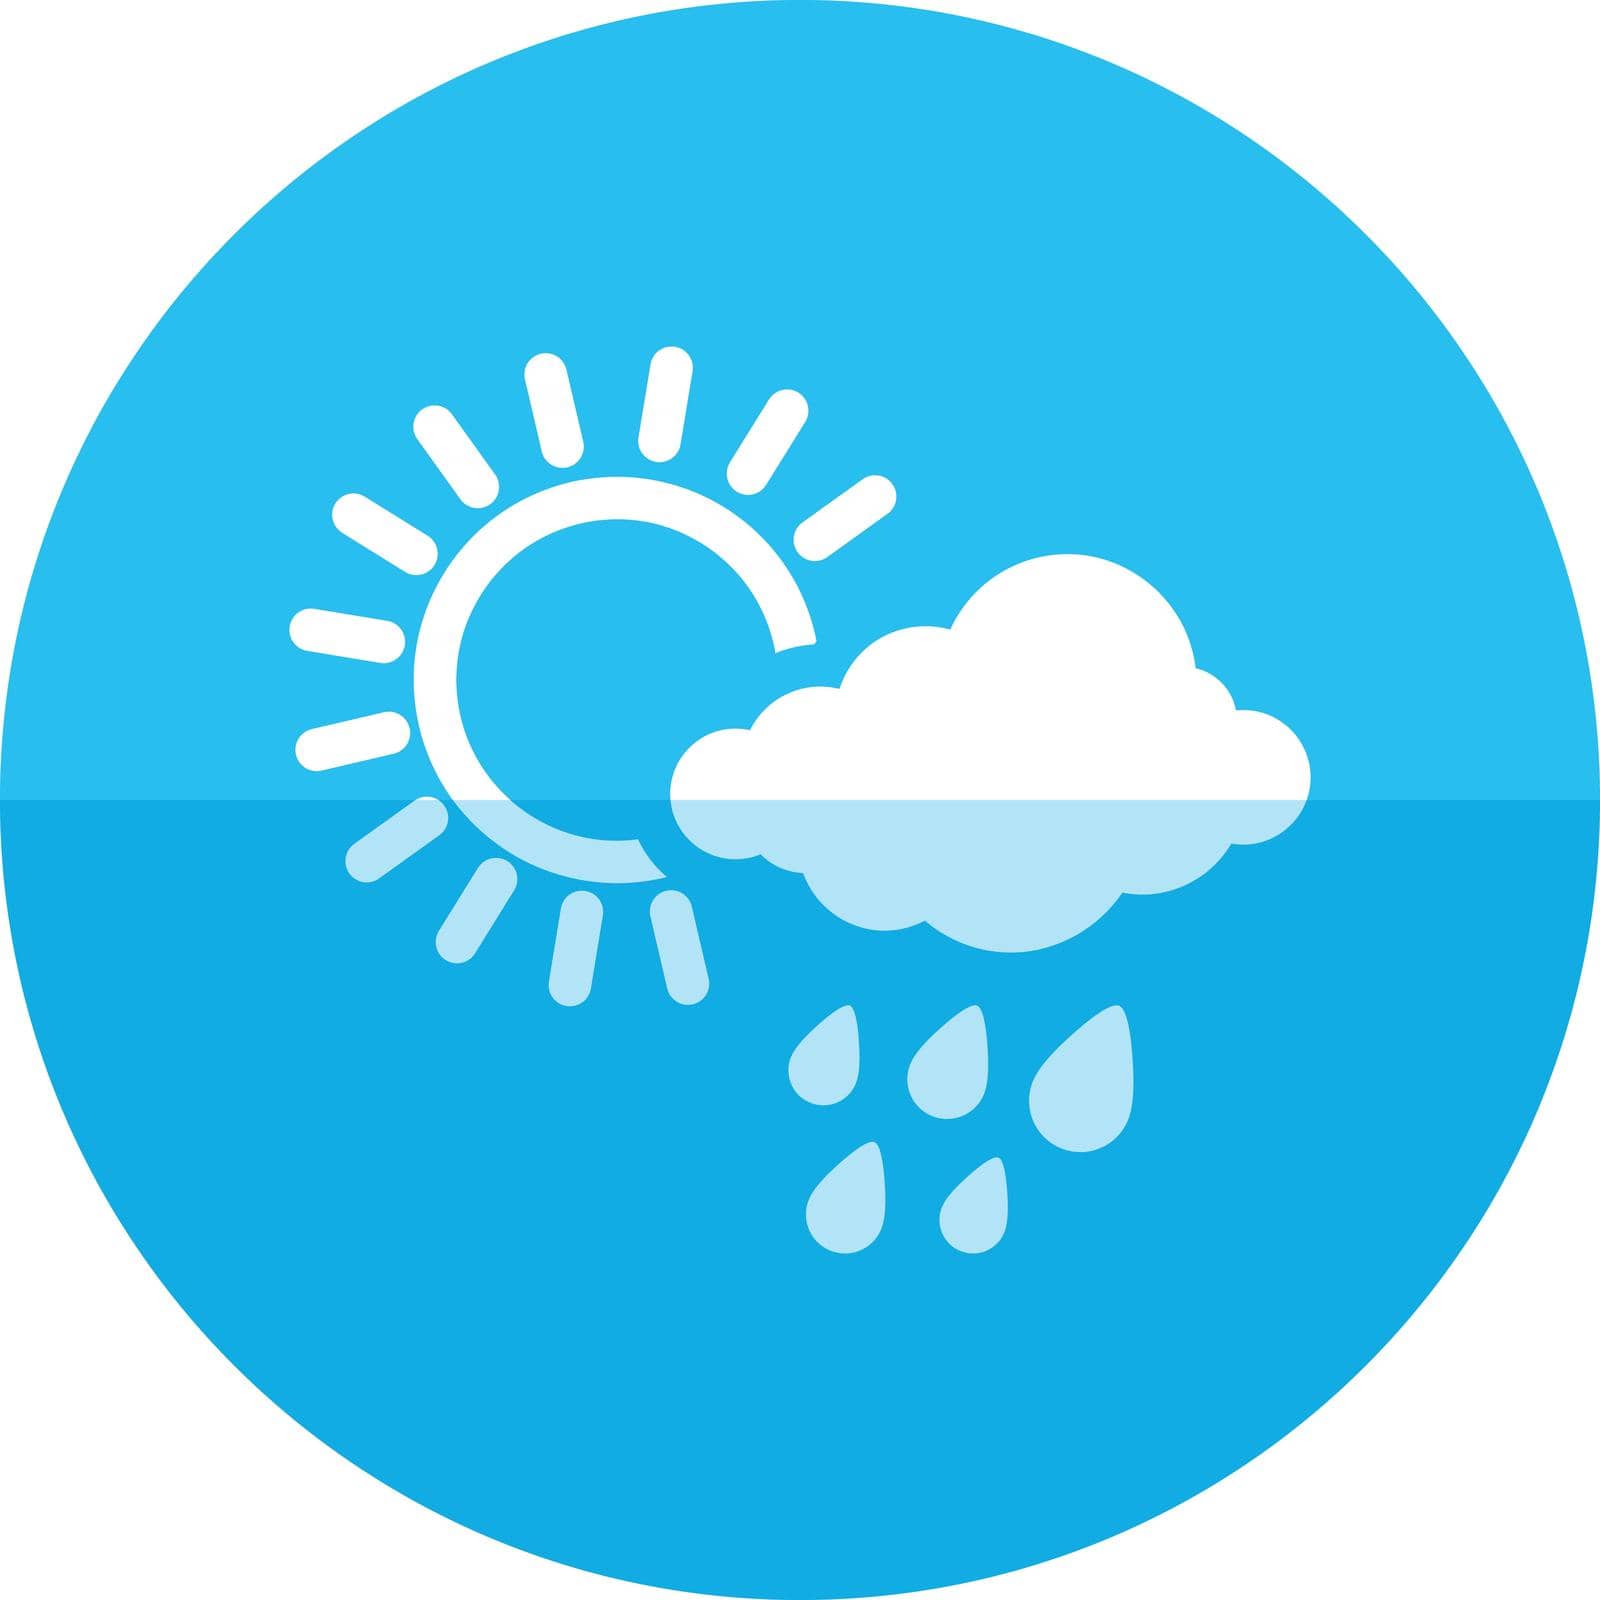 Rainy icon in flat color circle style. Season forecast monsoon wet meteorology